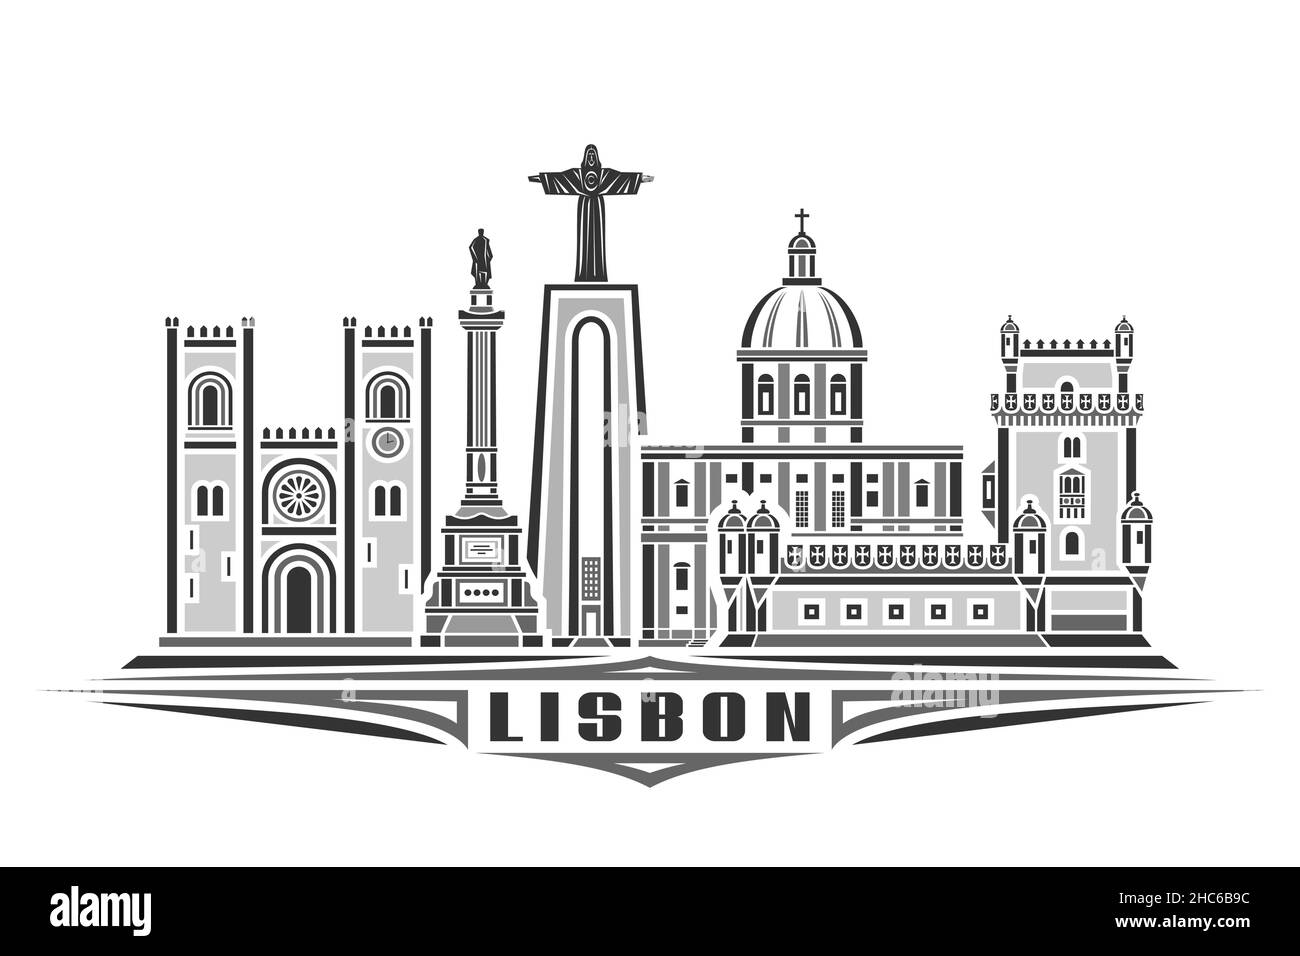 Ilustración vectorial de Lisboa, póster horizontal monocromo con diseño lineal lisbon city scape, concepto de arte urbano europeo con lett decorativa Ilustración del Vector